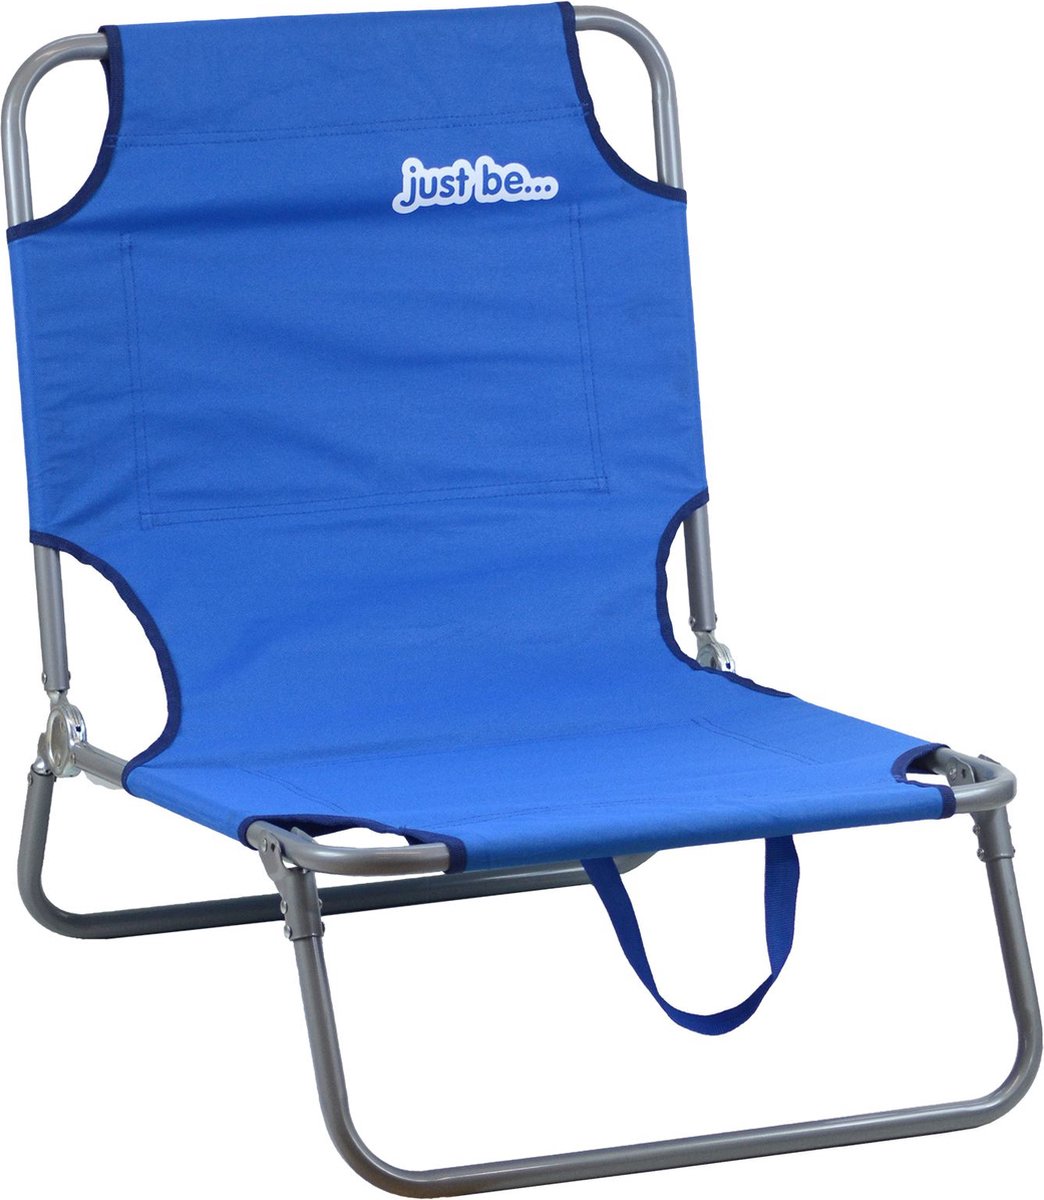 Just be - opvouwbare strandstoel - campingstoel - ligstoel - lichtgewicht - met opbergvakken - draagbaar (donkerblauw)